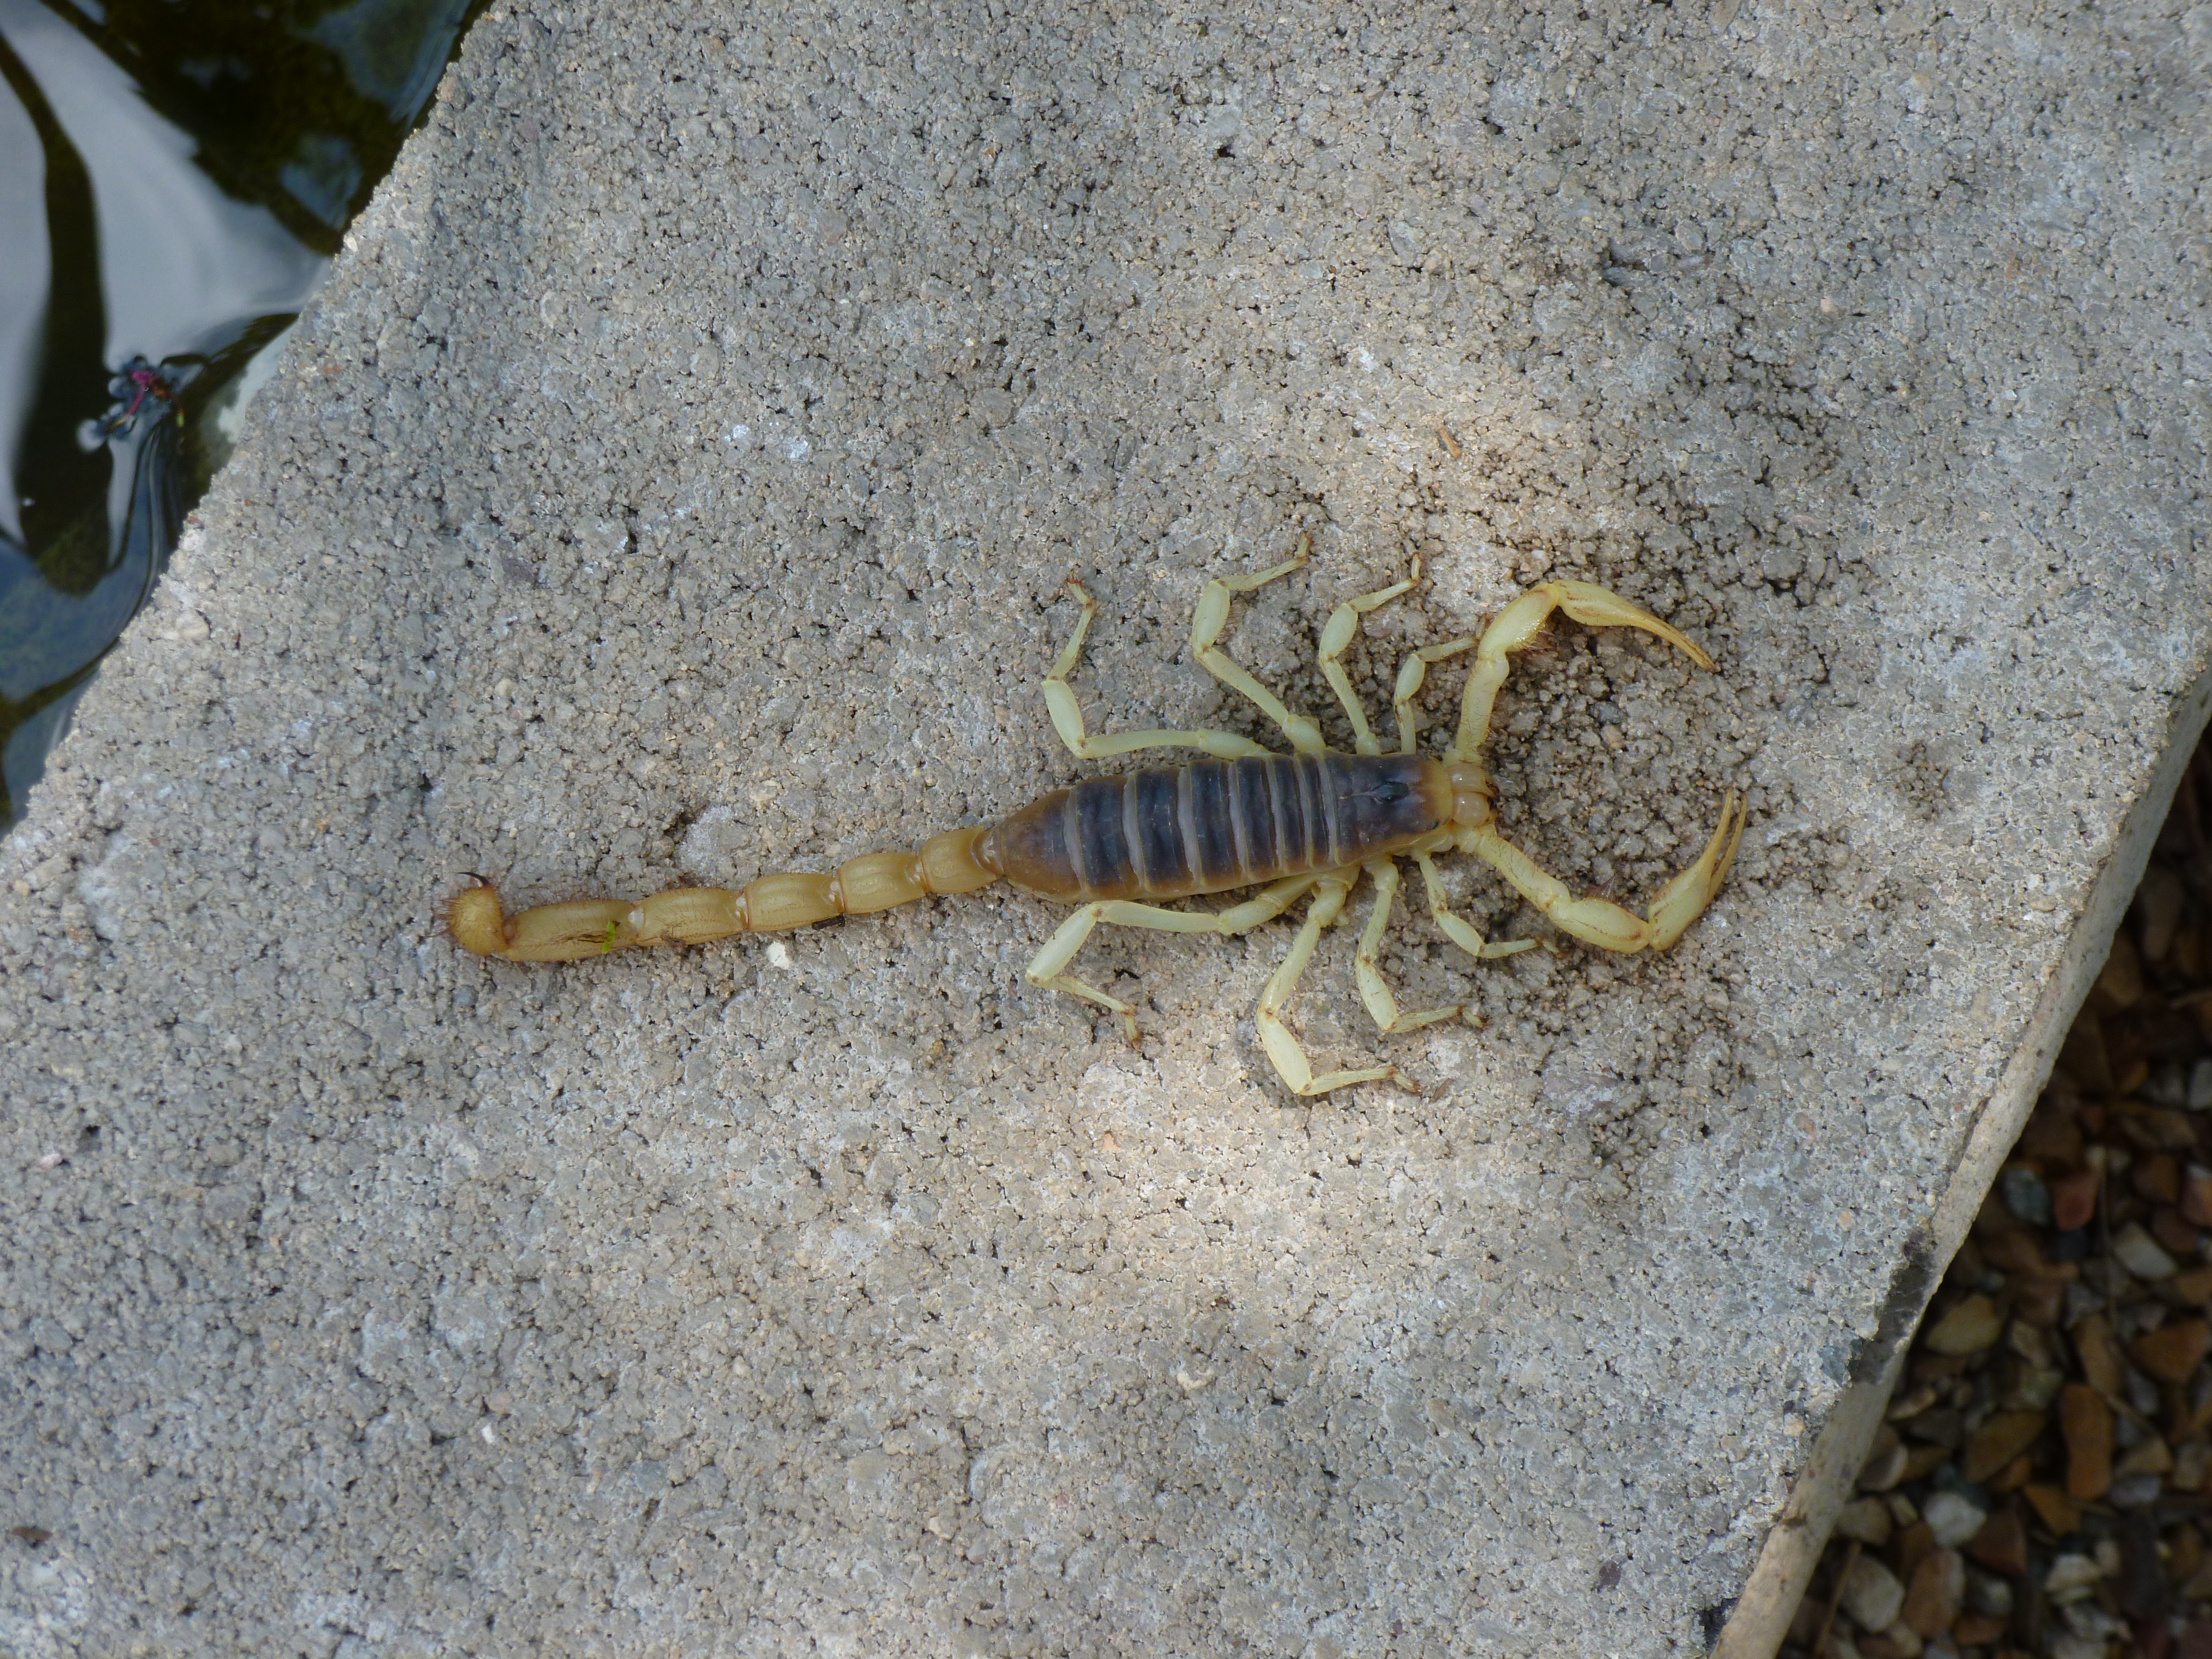 Giant Desert Hairy Scorpion – Largest scorpion in North America ...